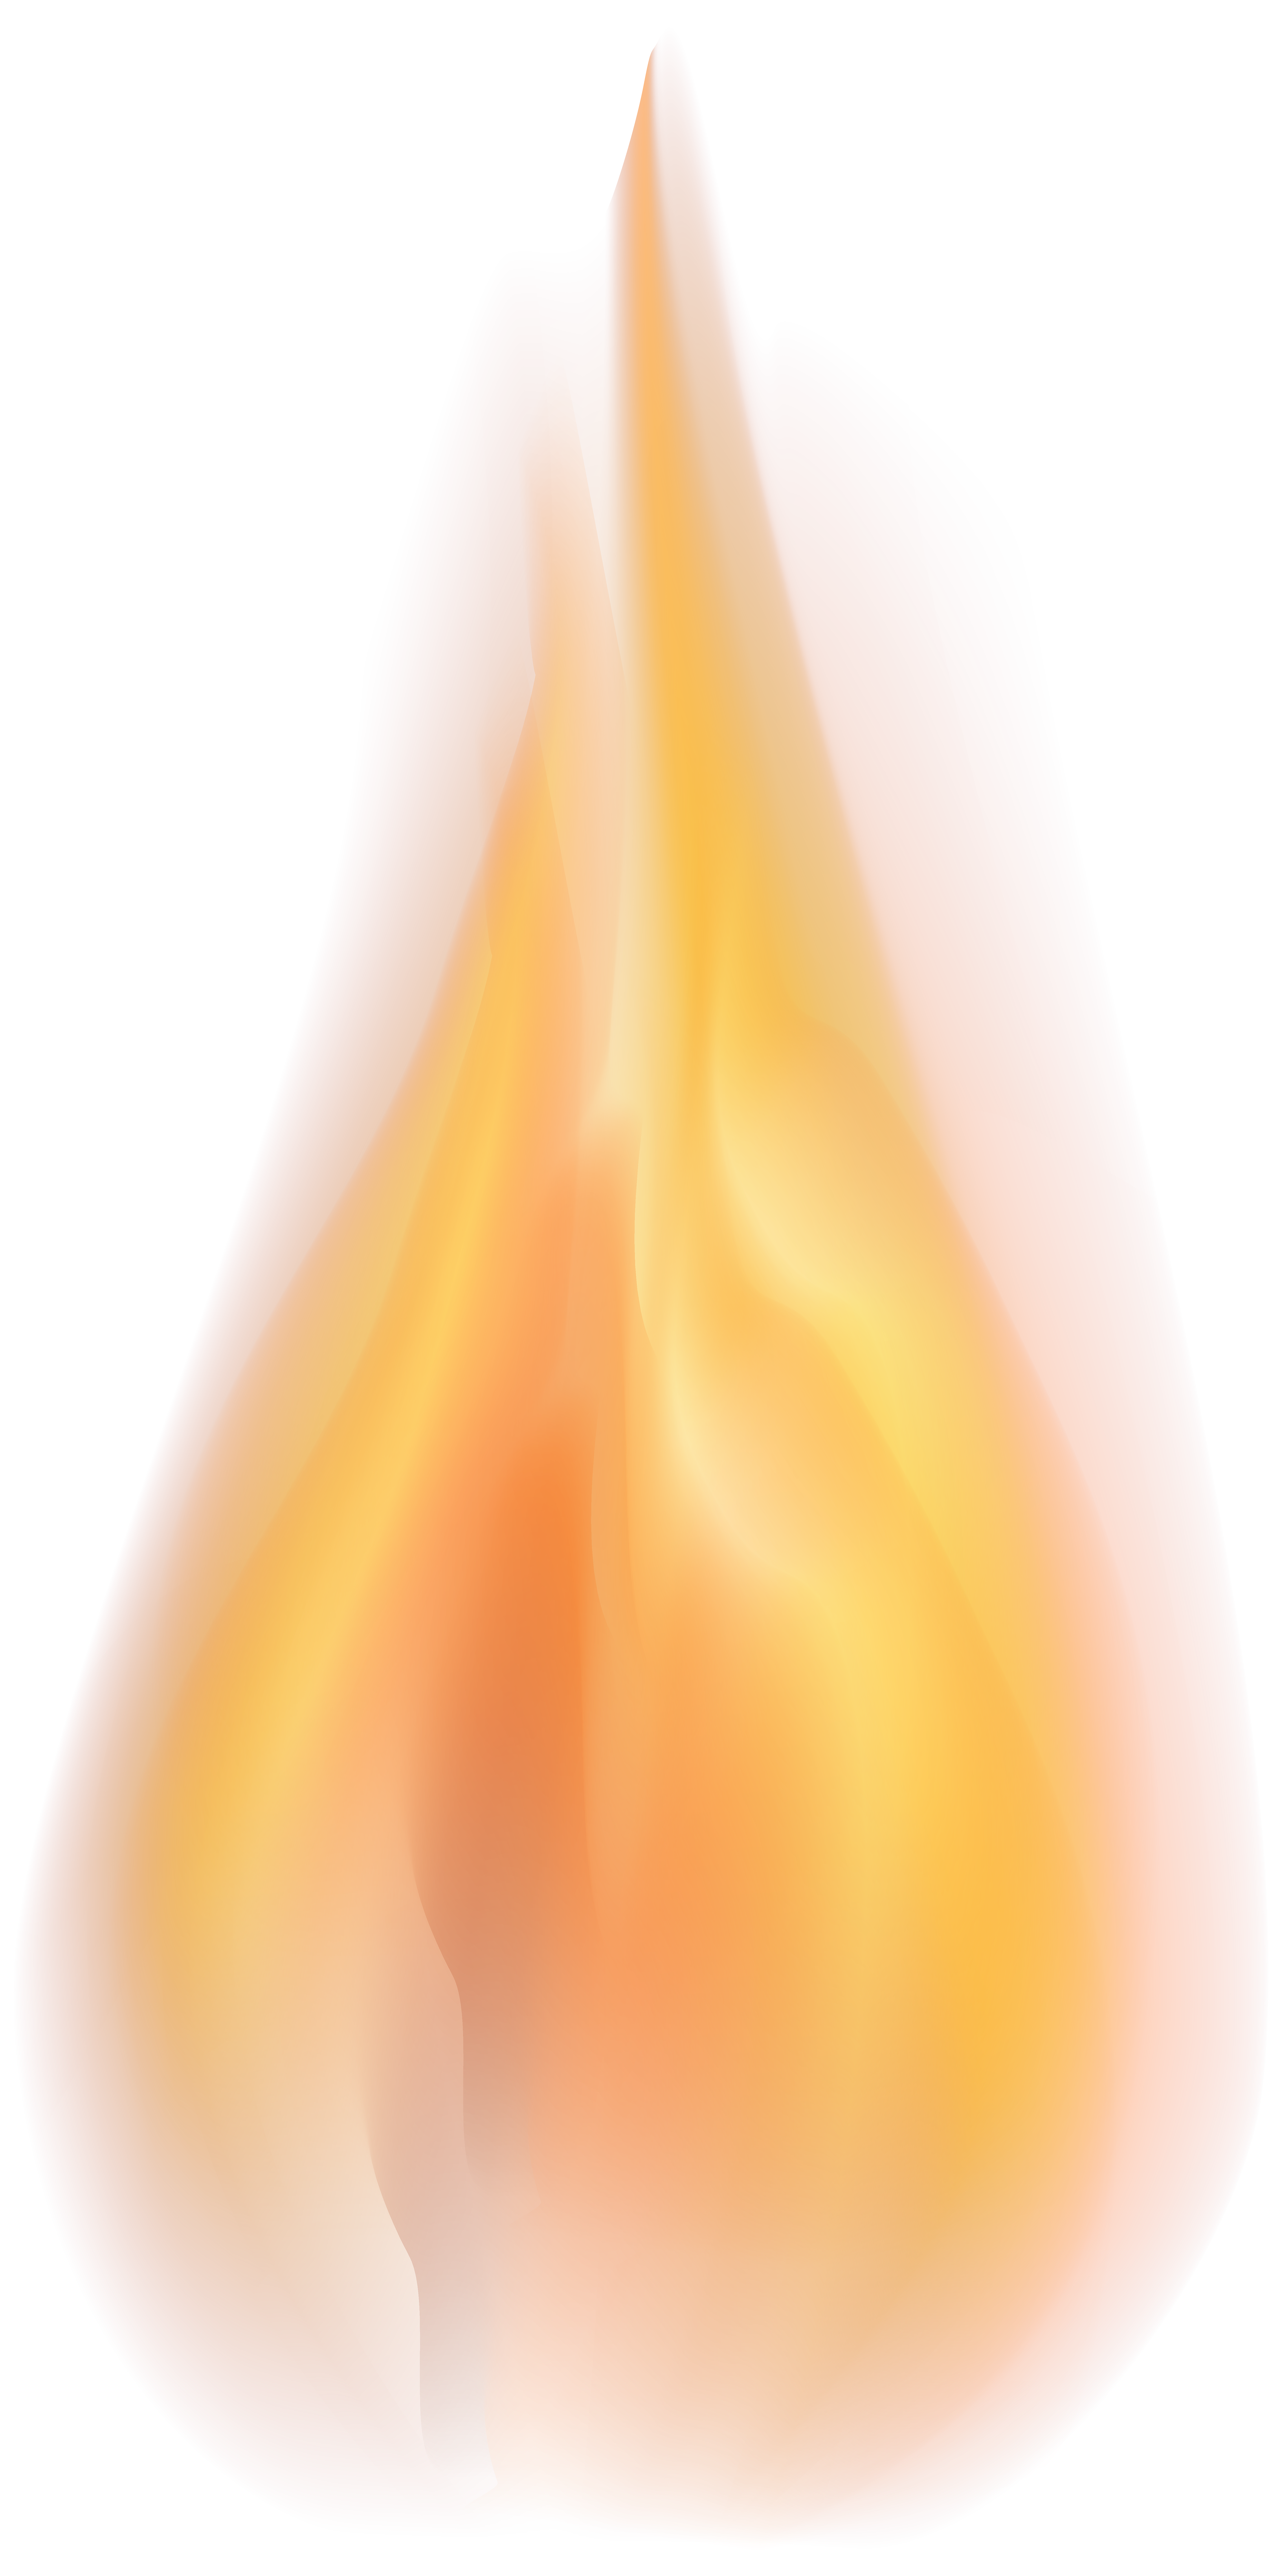 flames clipart torch fire